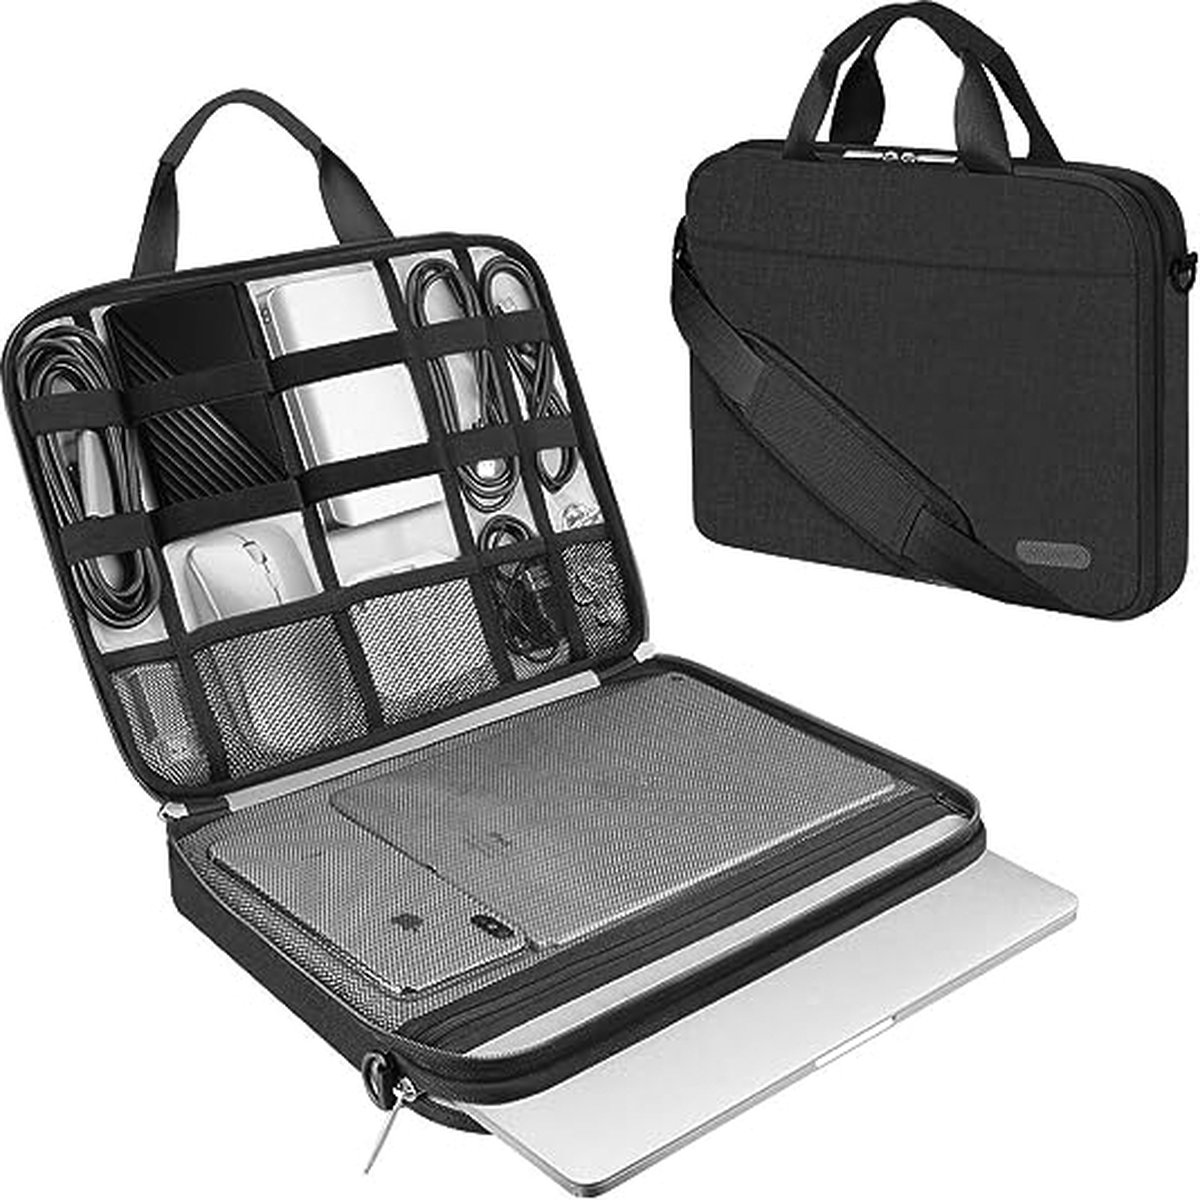 SHOP YOLO-laptoptas 15.6 inch-accessoire tas met -riem en handvat-Zwart